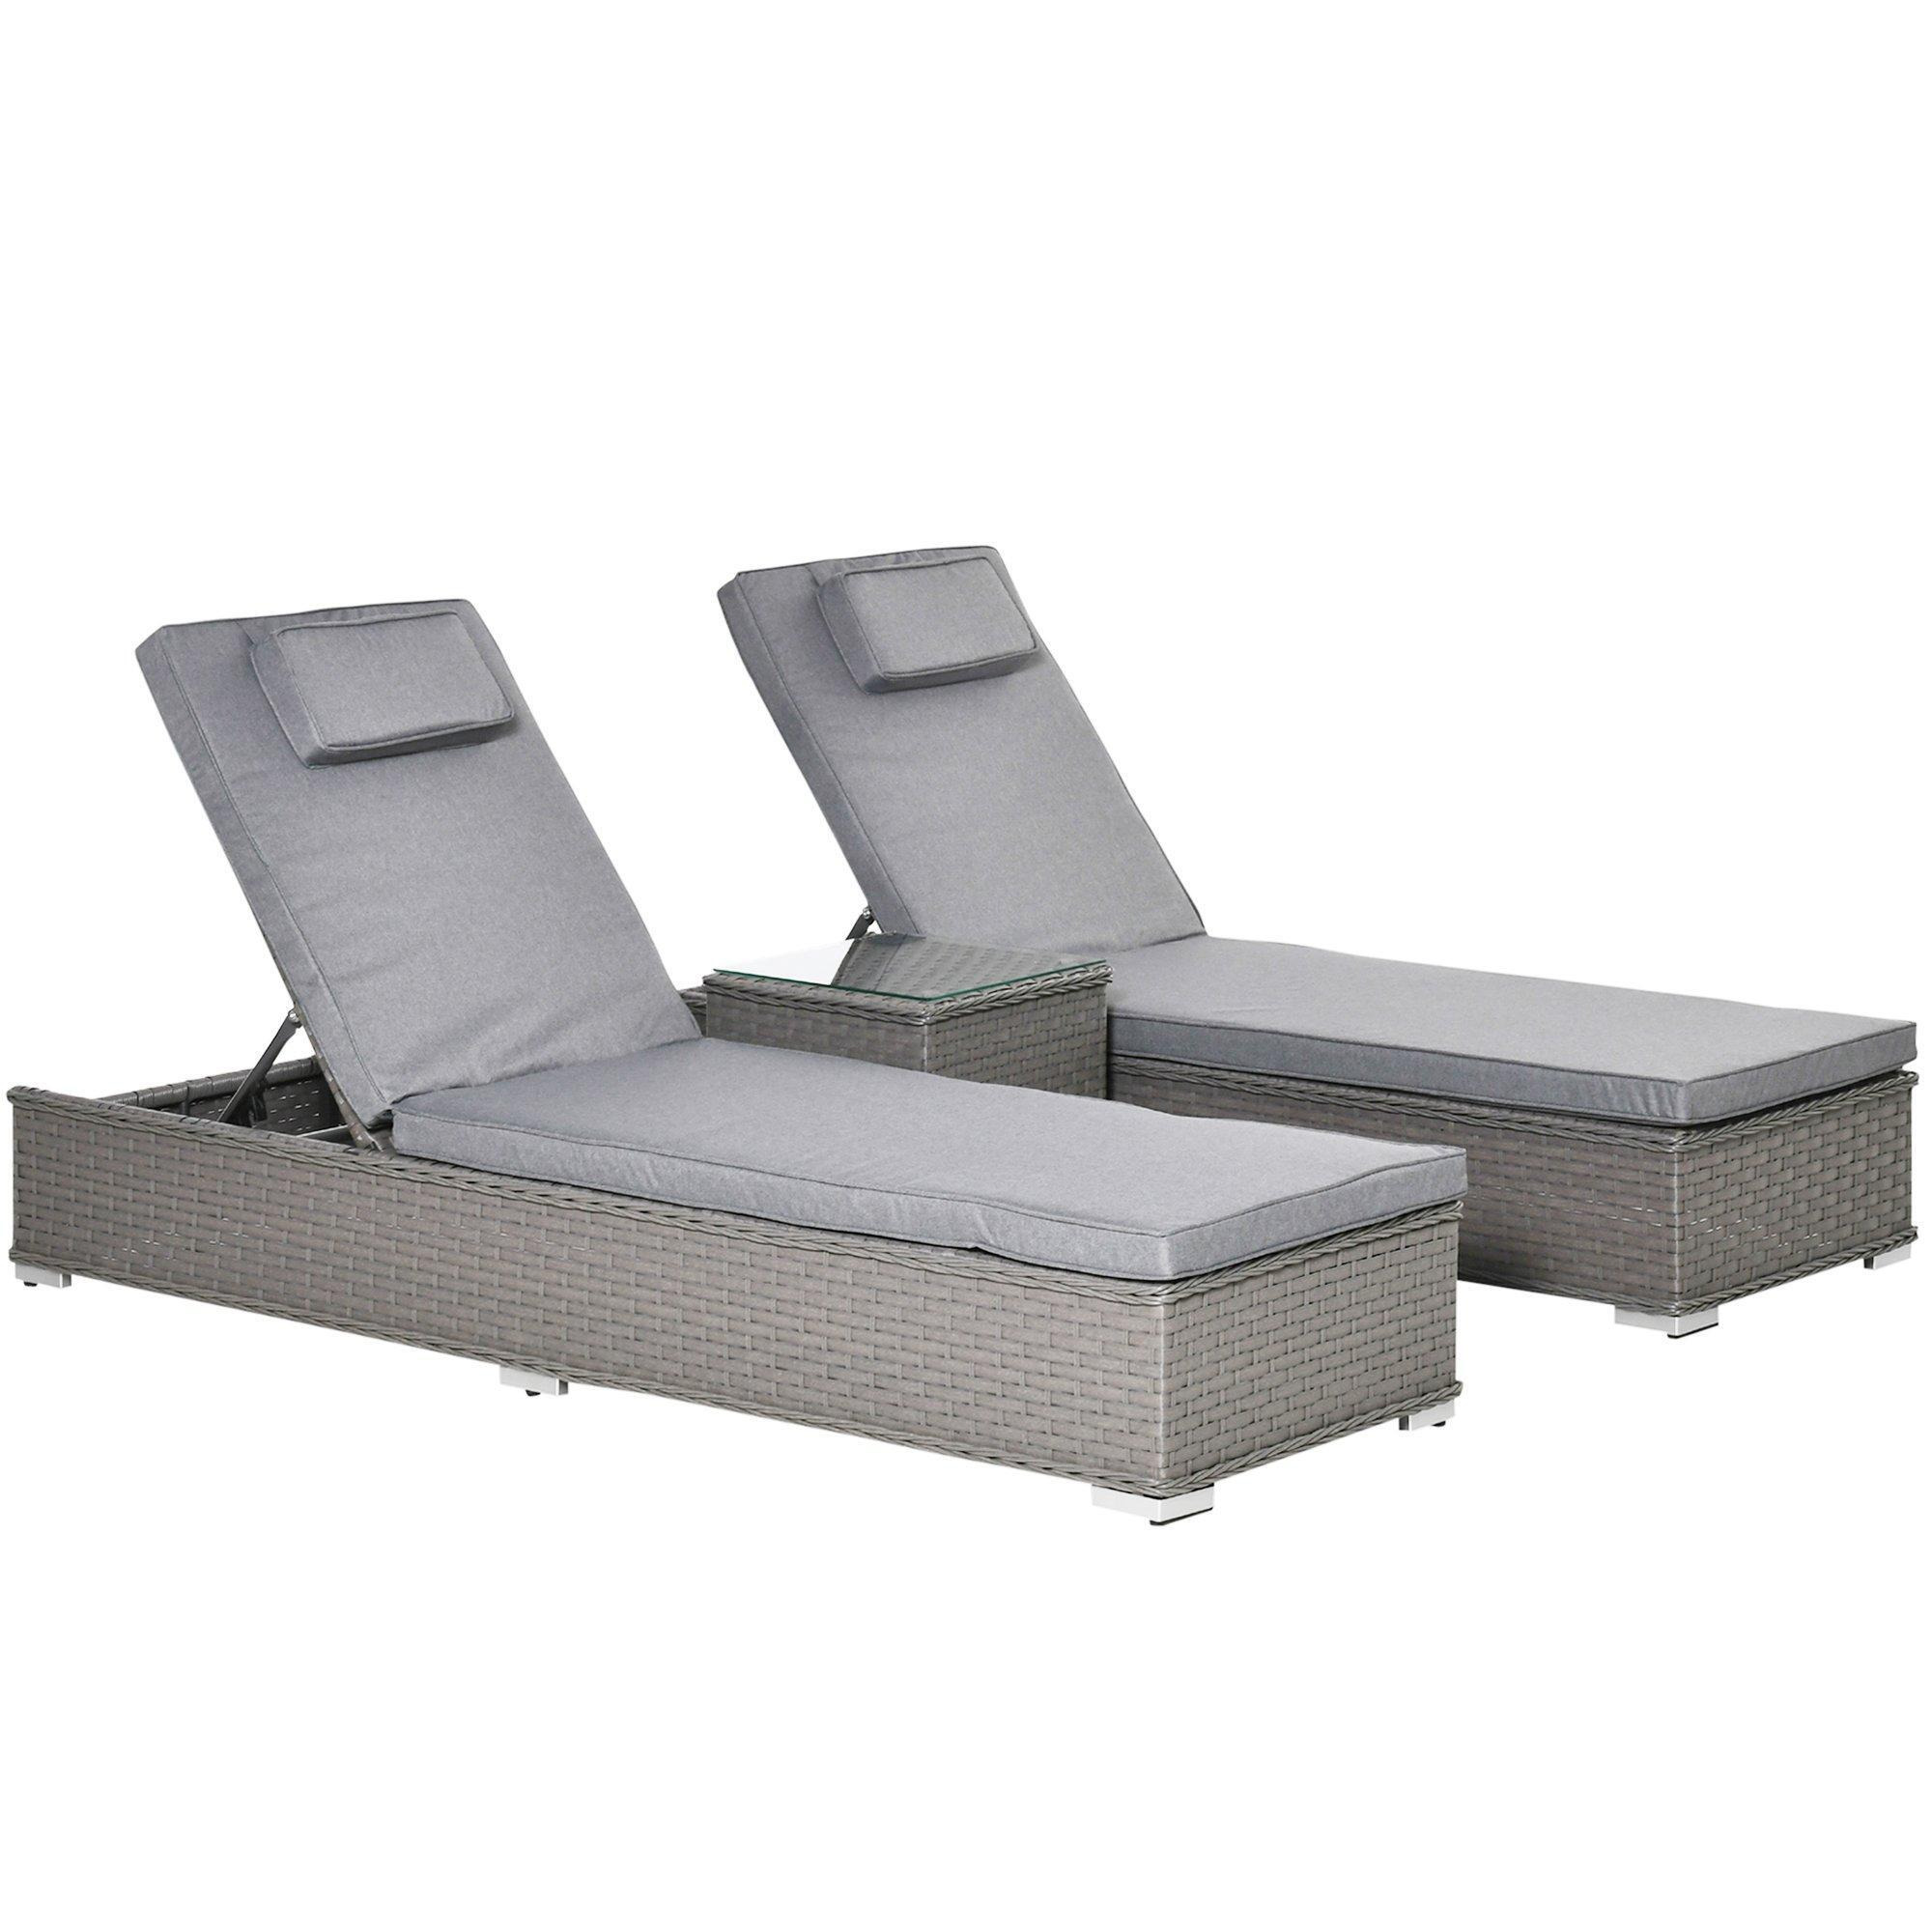 3PC Rattan Sun Lounger Garden Outdoor Wicker Recliner Bed Side Table - Grey - image 1